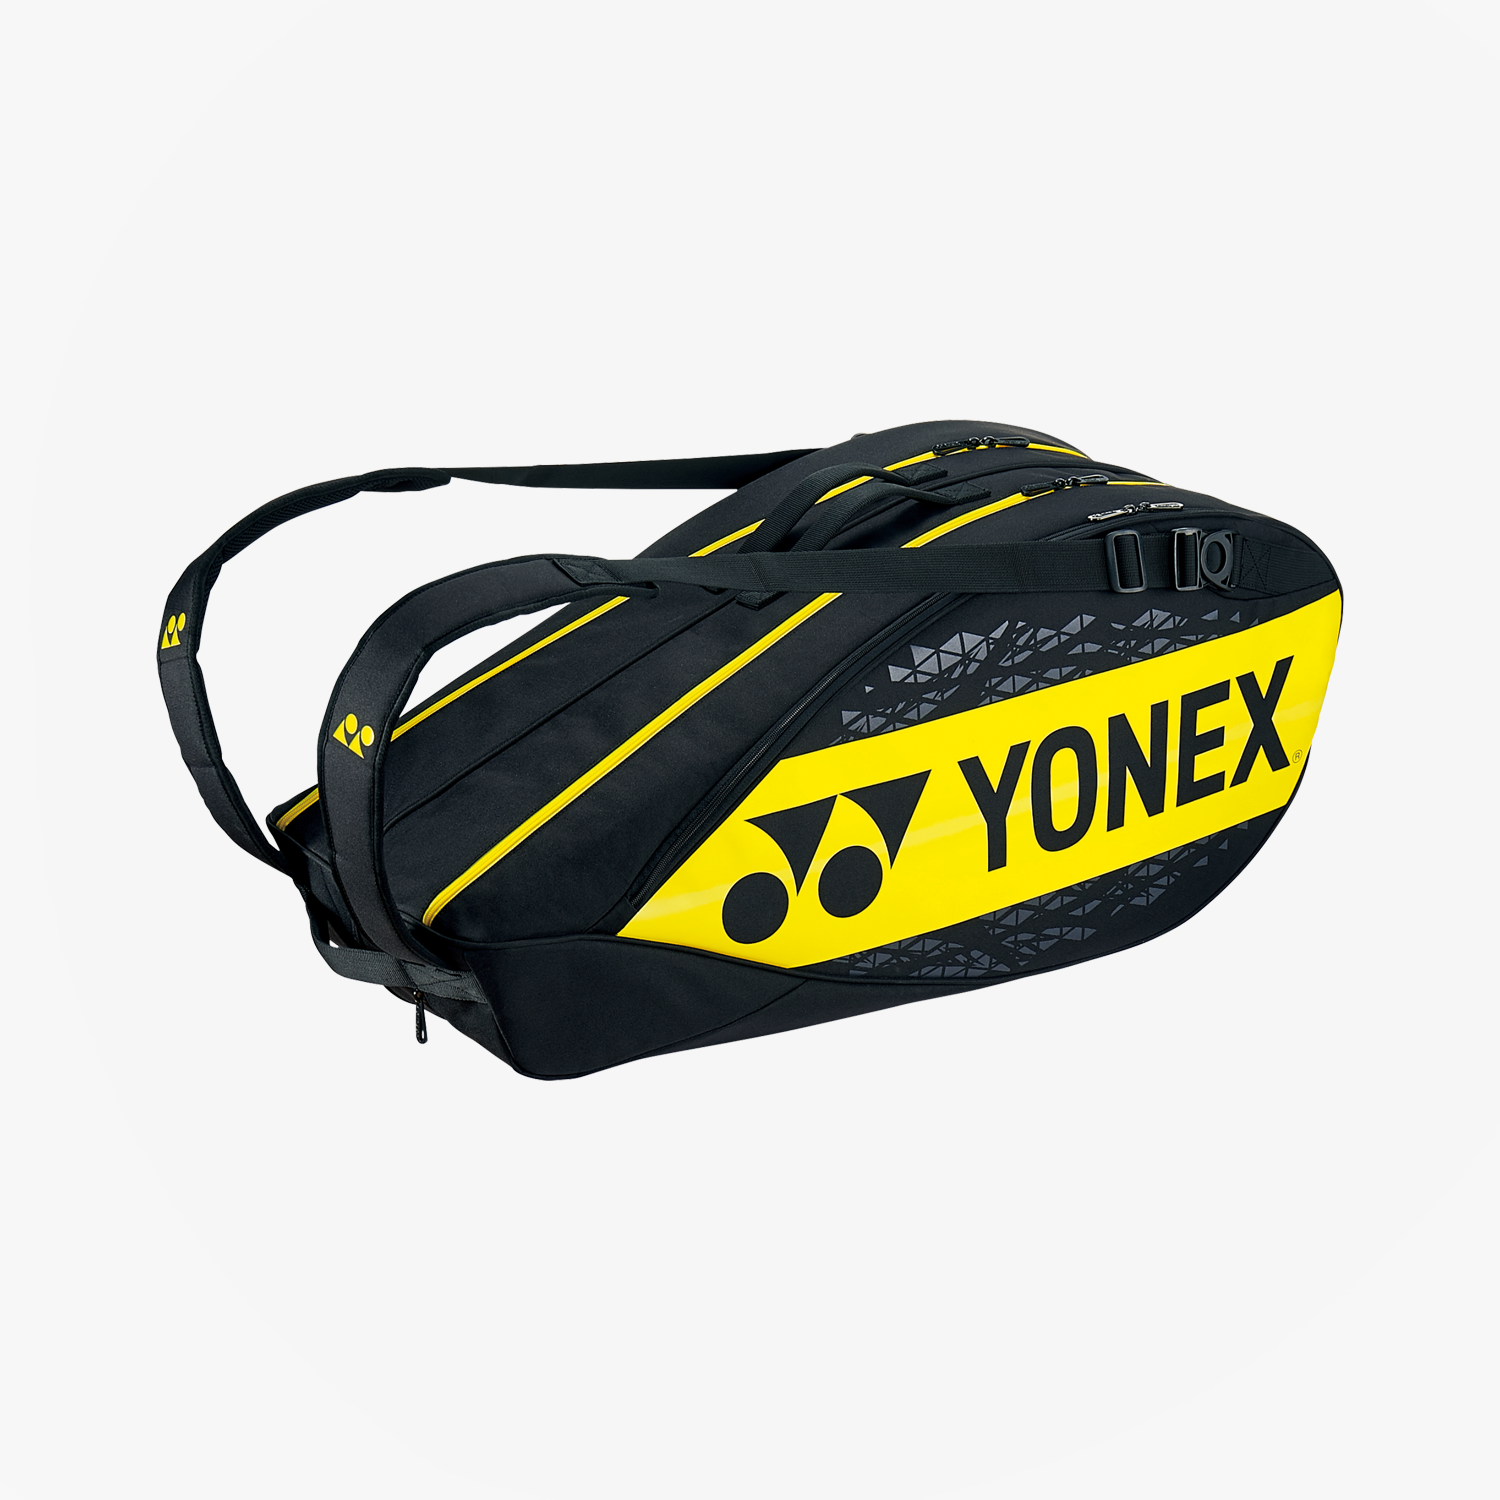 Yonex Badminton Tennis Racket 6pk Bag BAG92202R (Lightning Yellow)